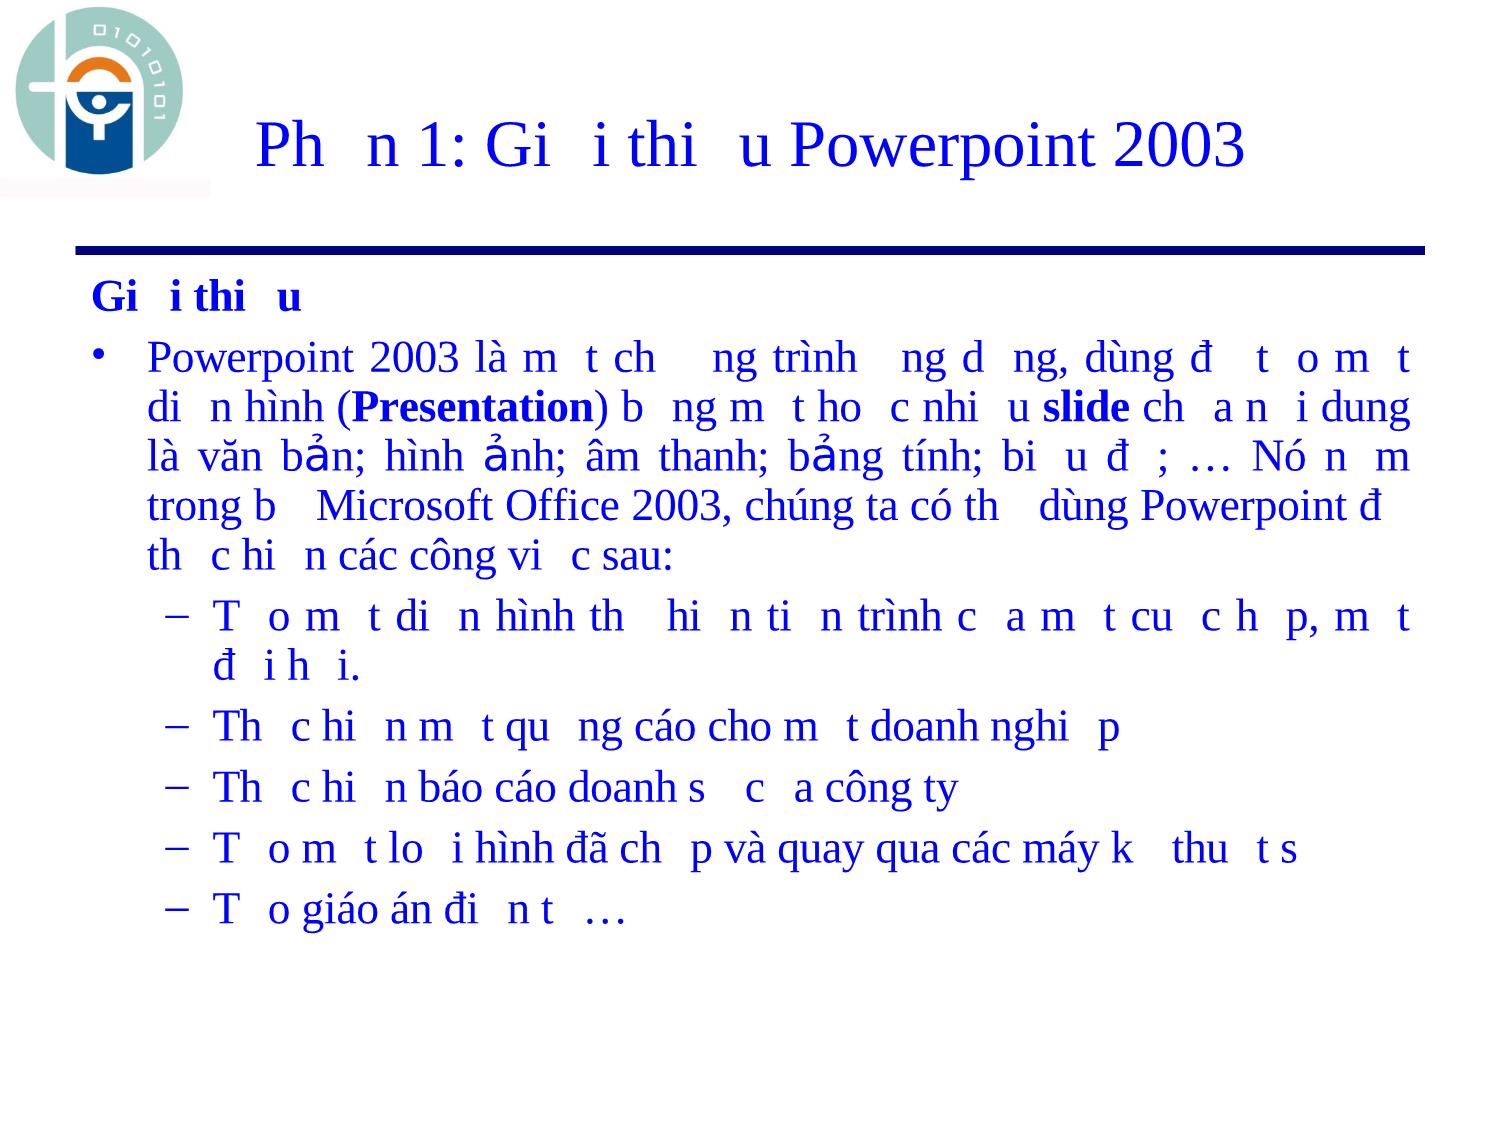 Giới thiệu Powerpoint 2003 trang 2